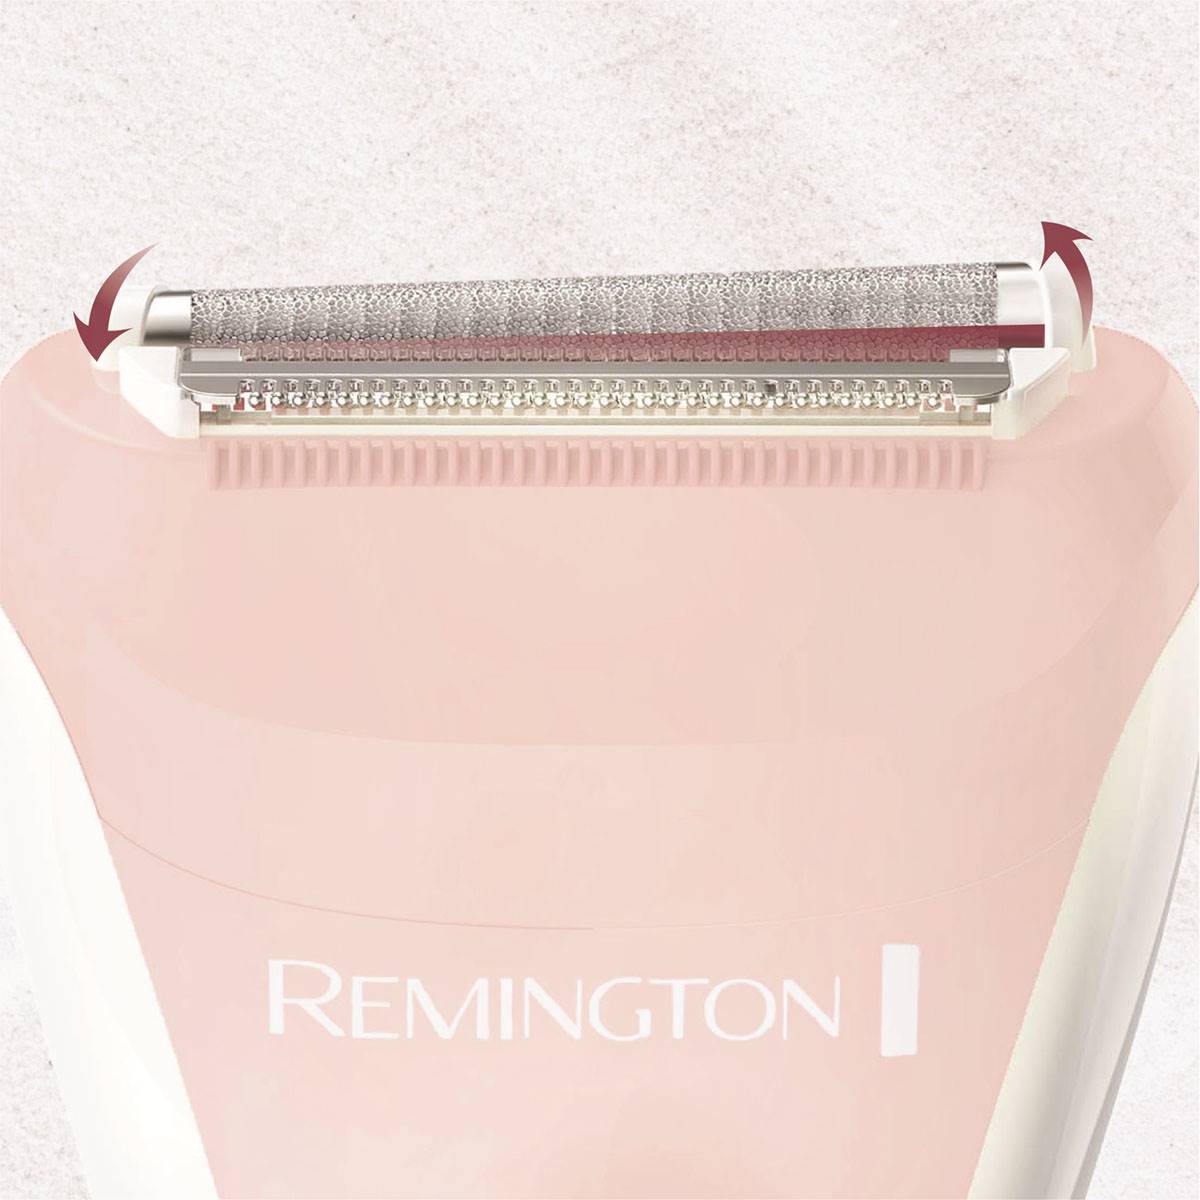 Remington Smooth & Silky Blade Foil Shaver